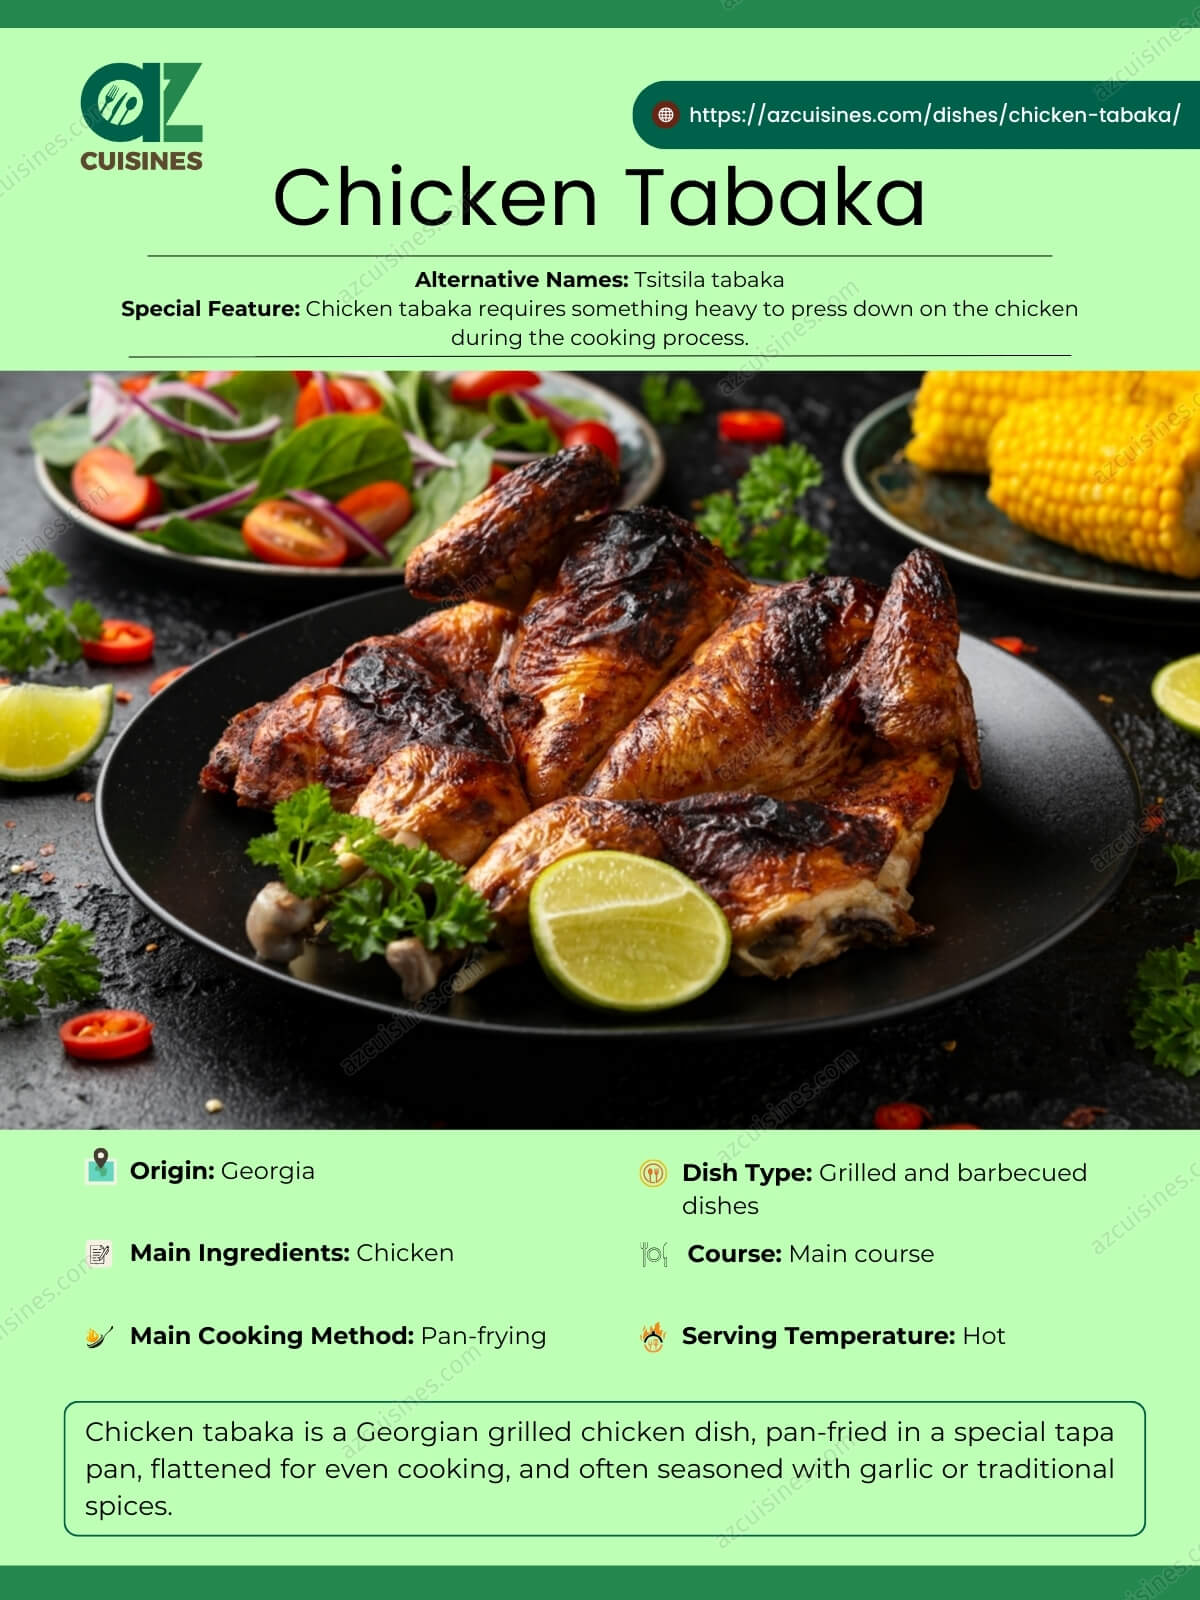 Chicken Tabaka Overview